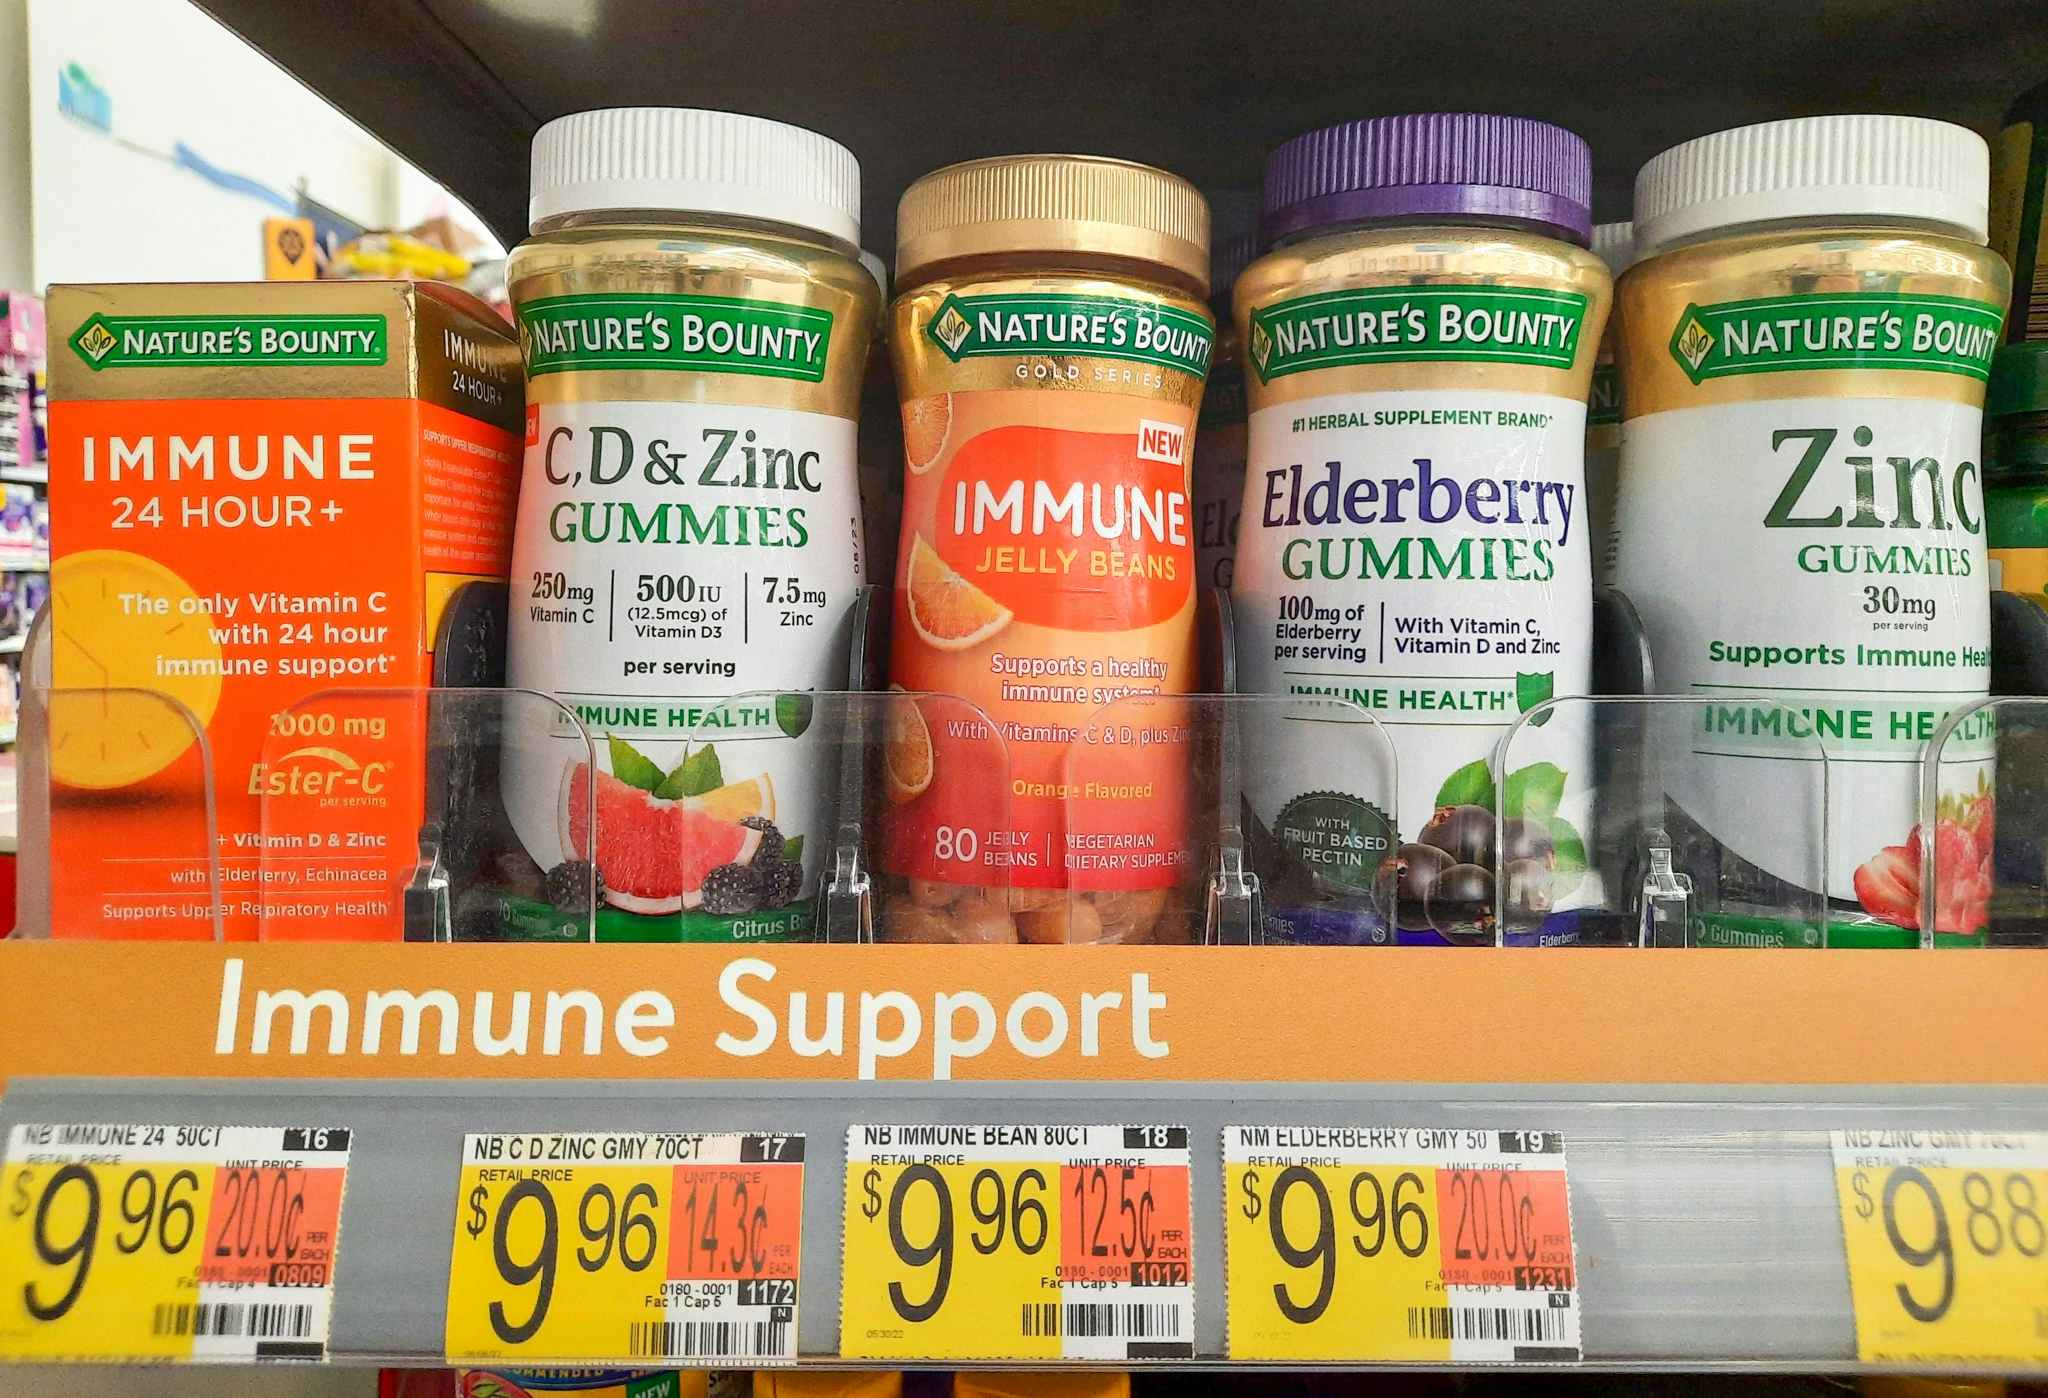 Nature's Bounty Immune Jelly Bean Vitamins at Walmart